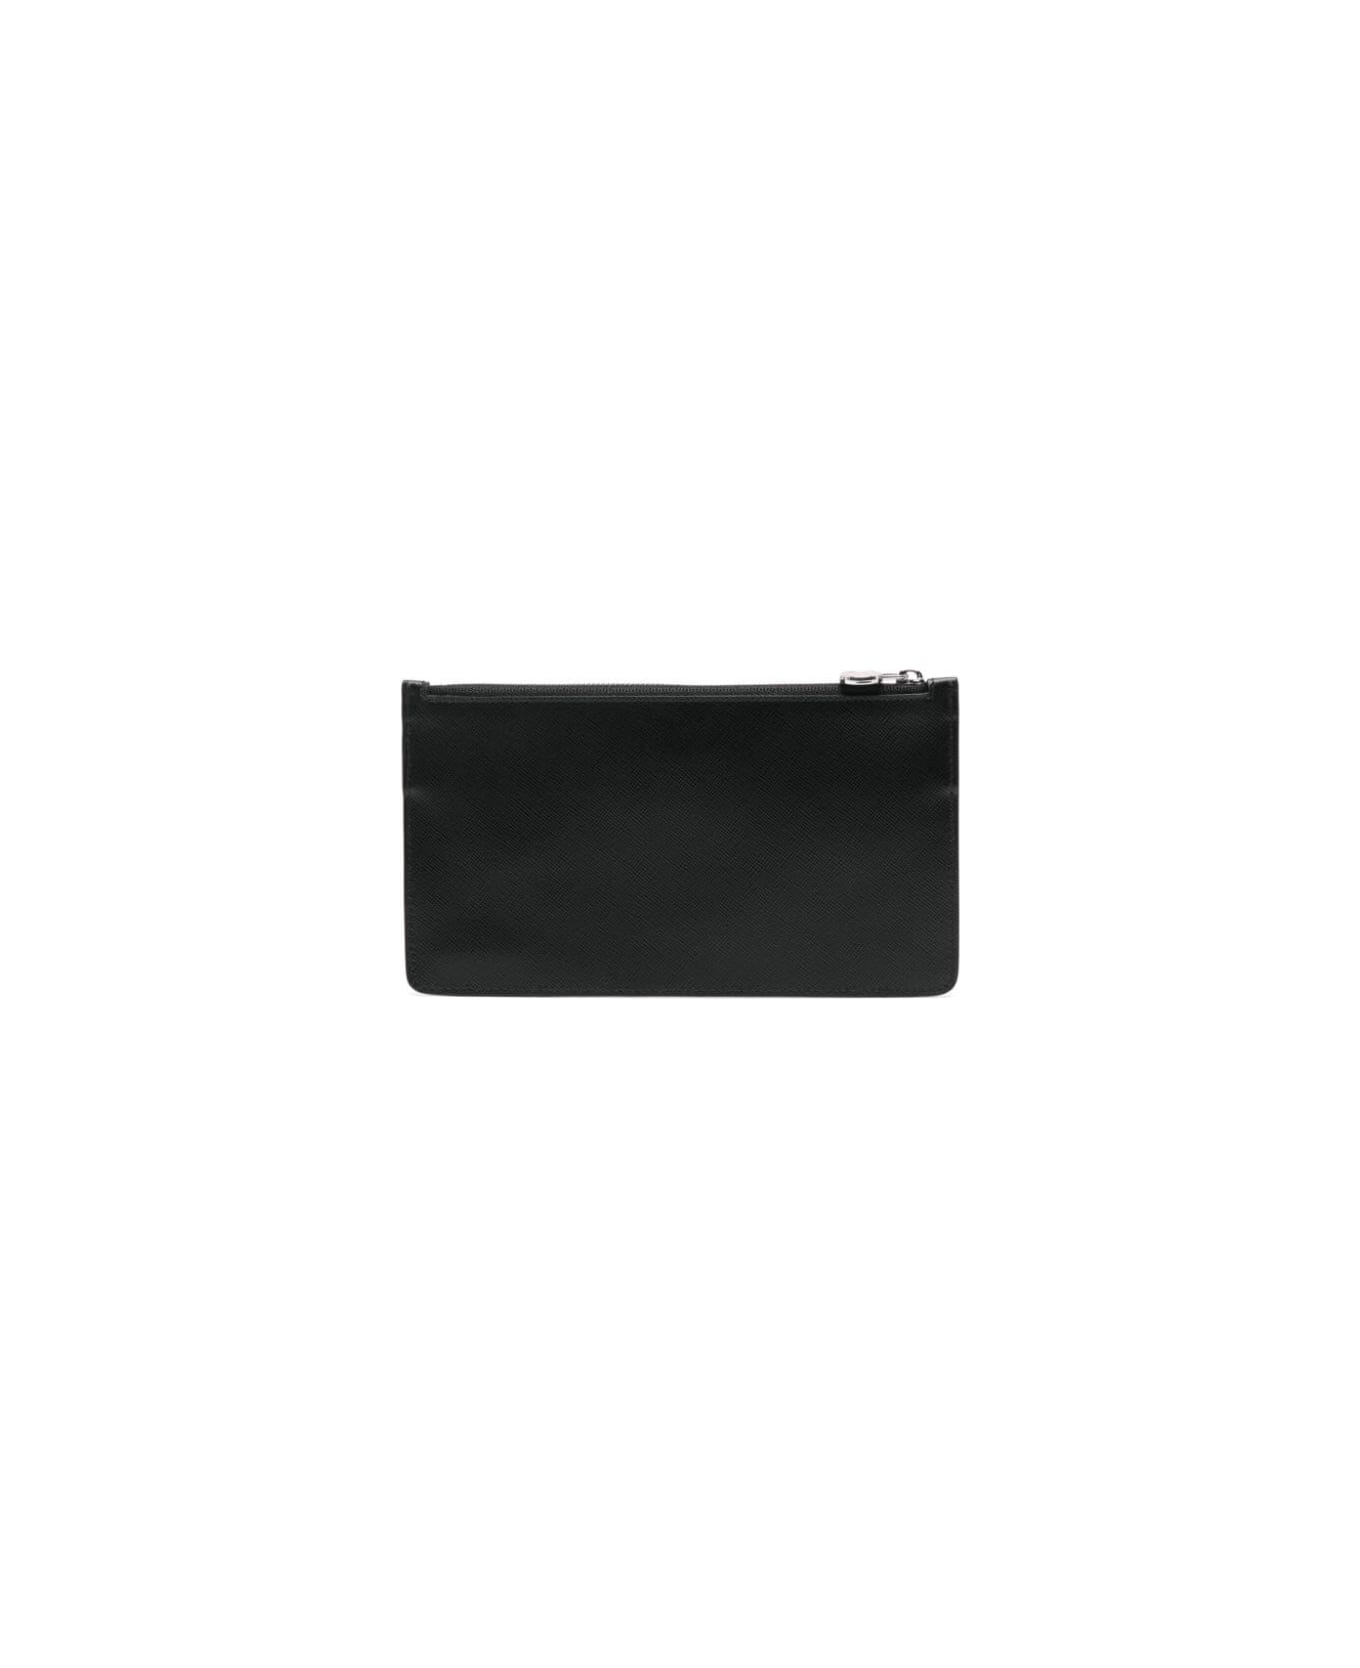 Kiton Wallet - Black 財布